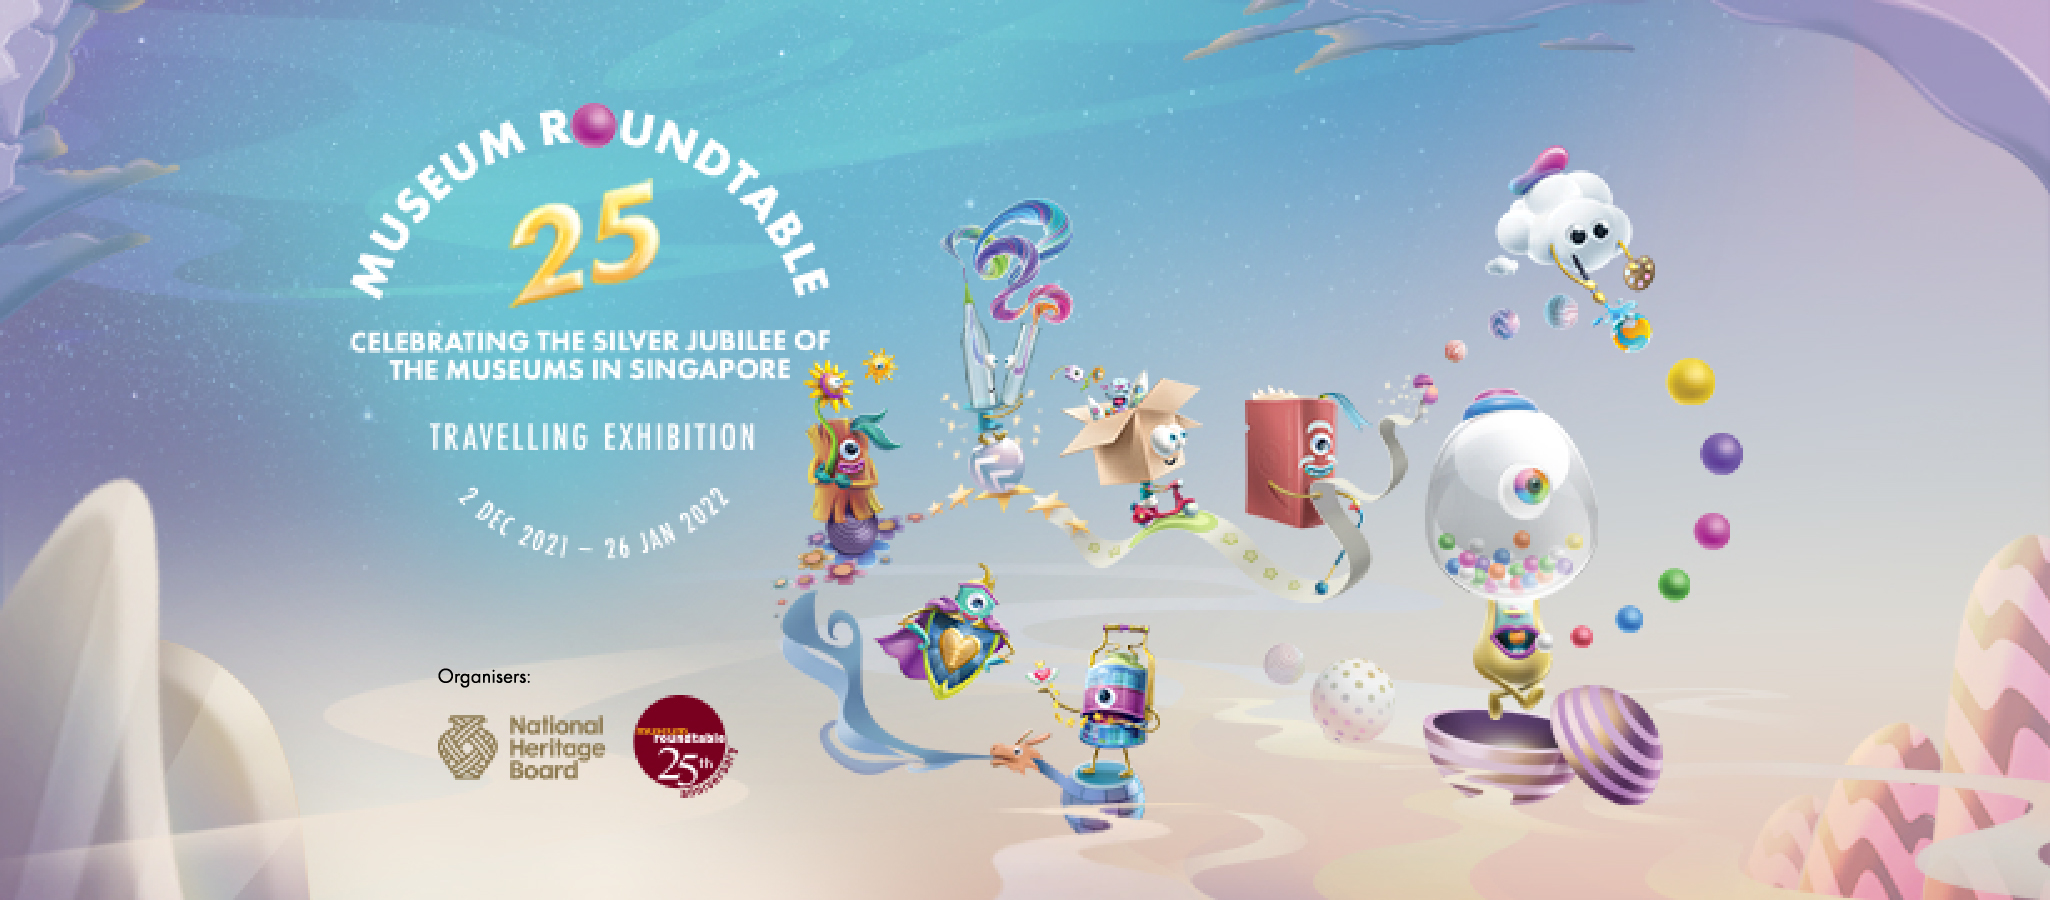 MR 25th_Travel-Exhibition_FB web banner